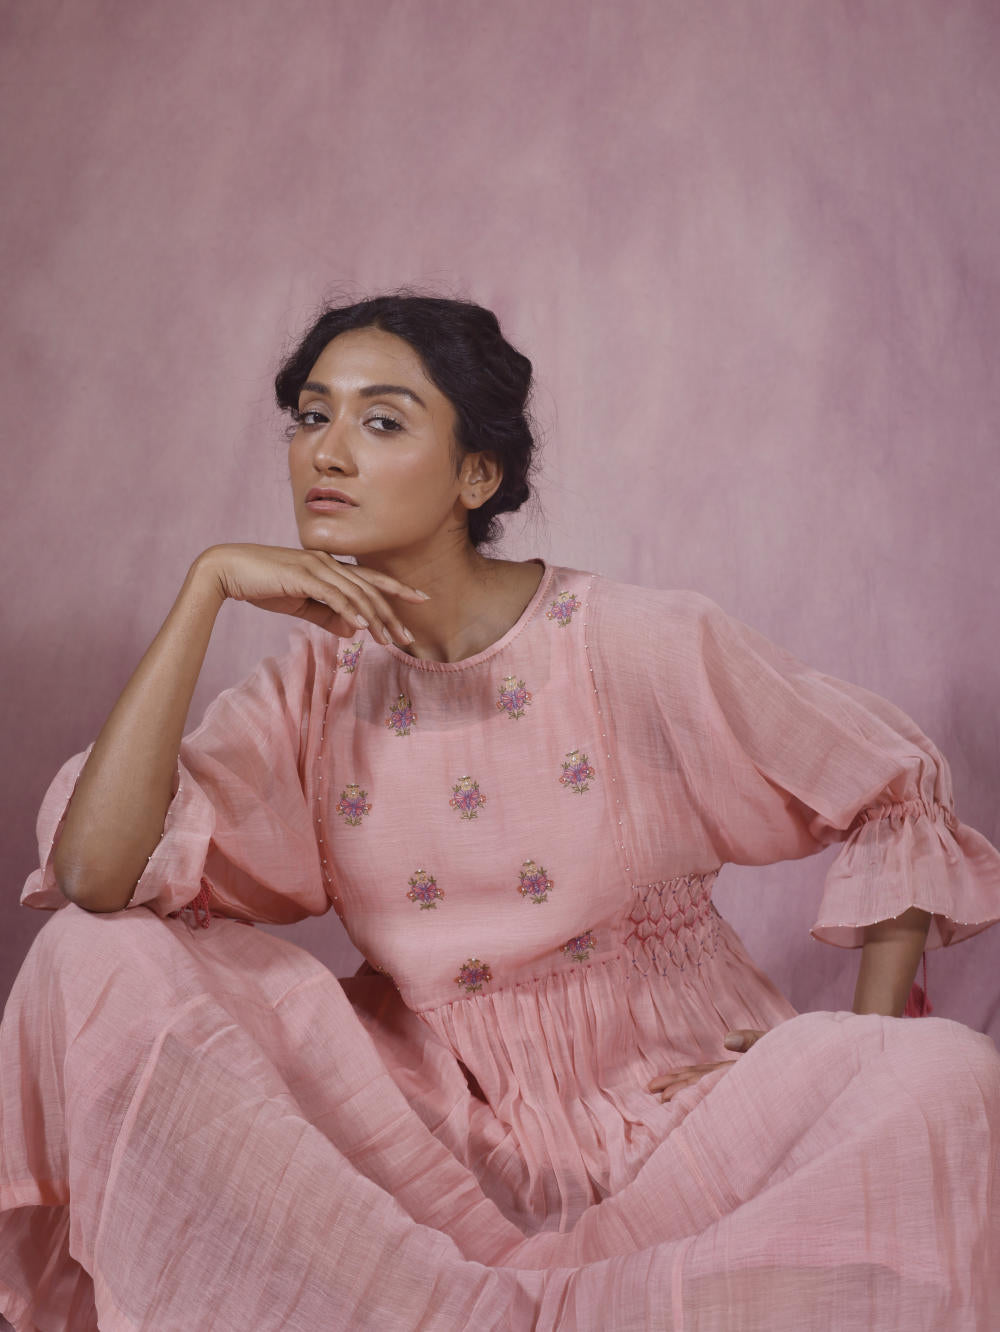 The pink sorbet outfit Fashion Chokhi Chorri 